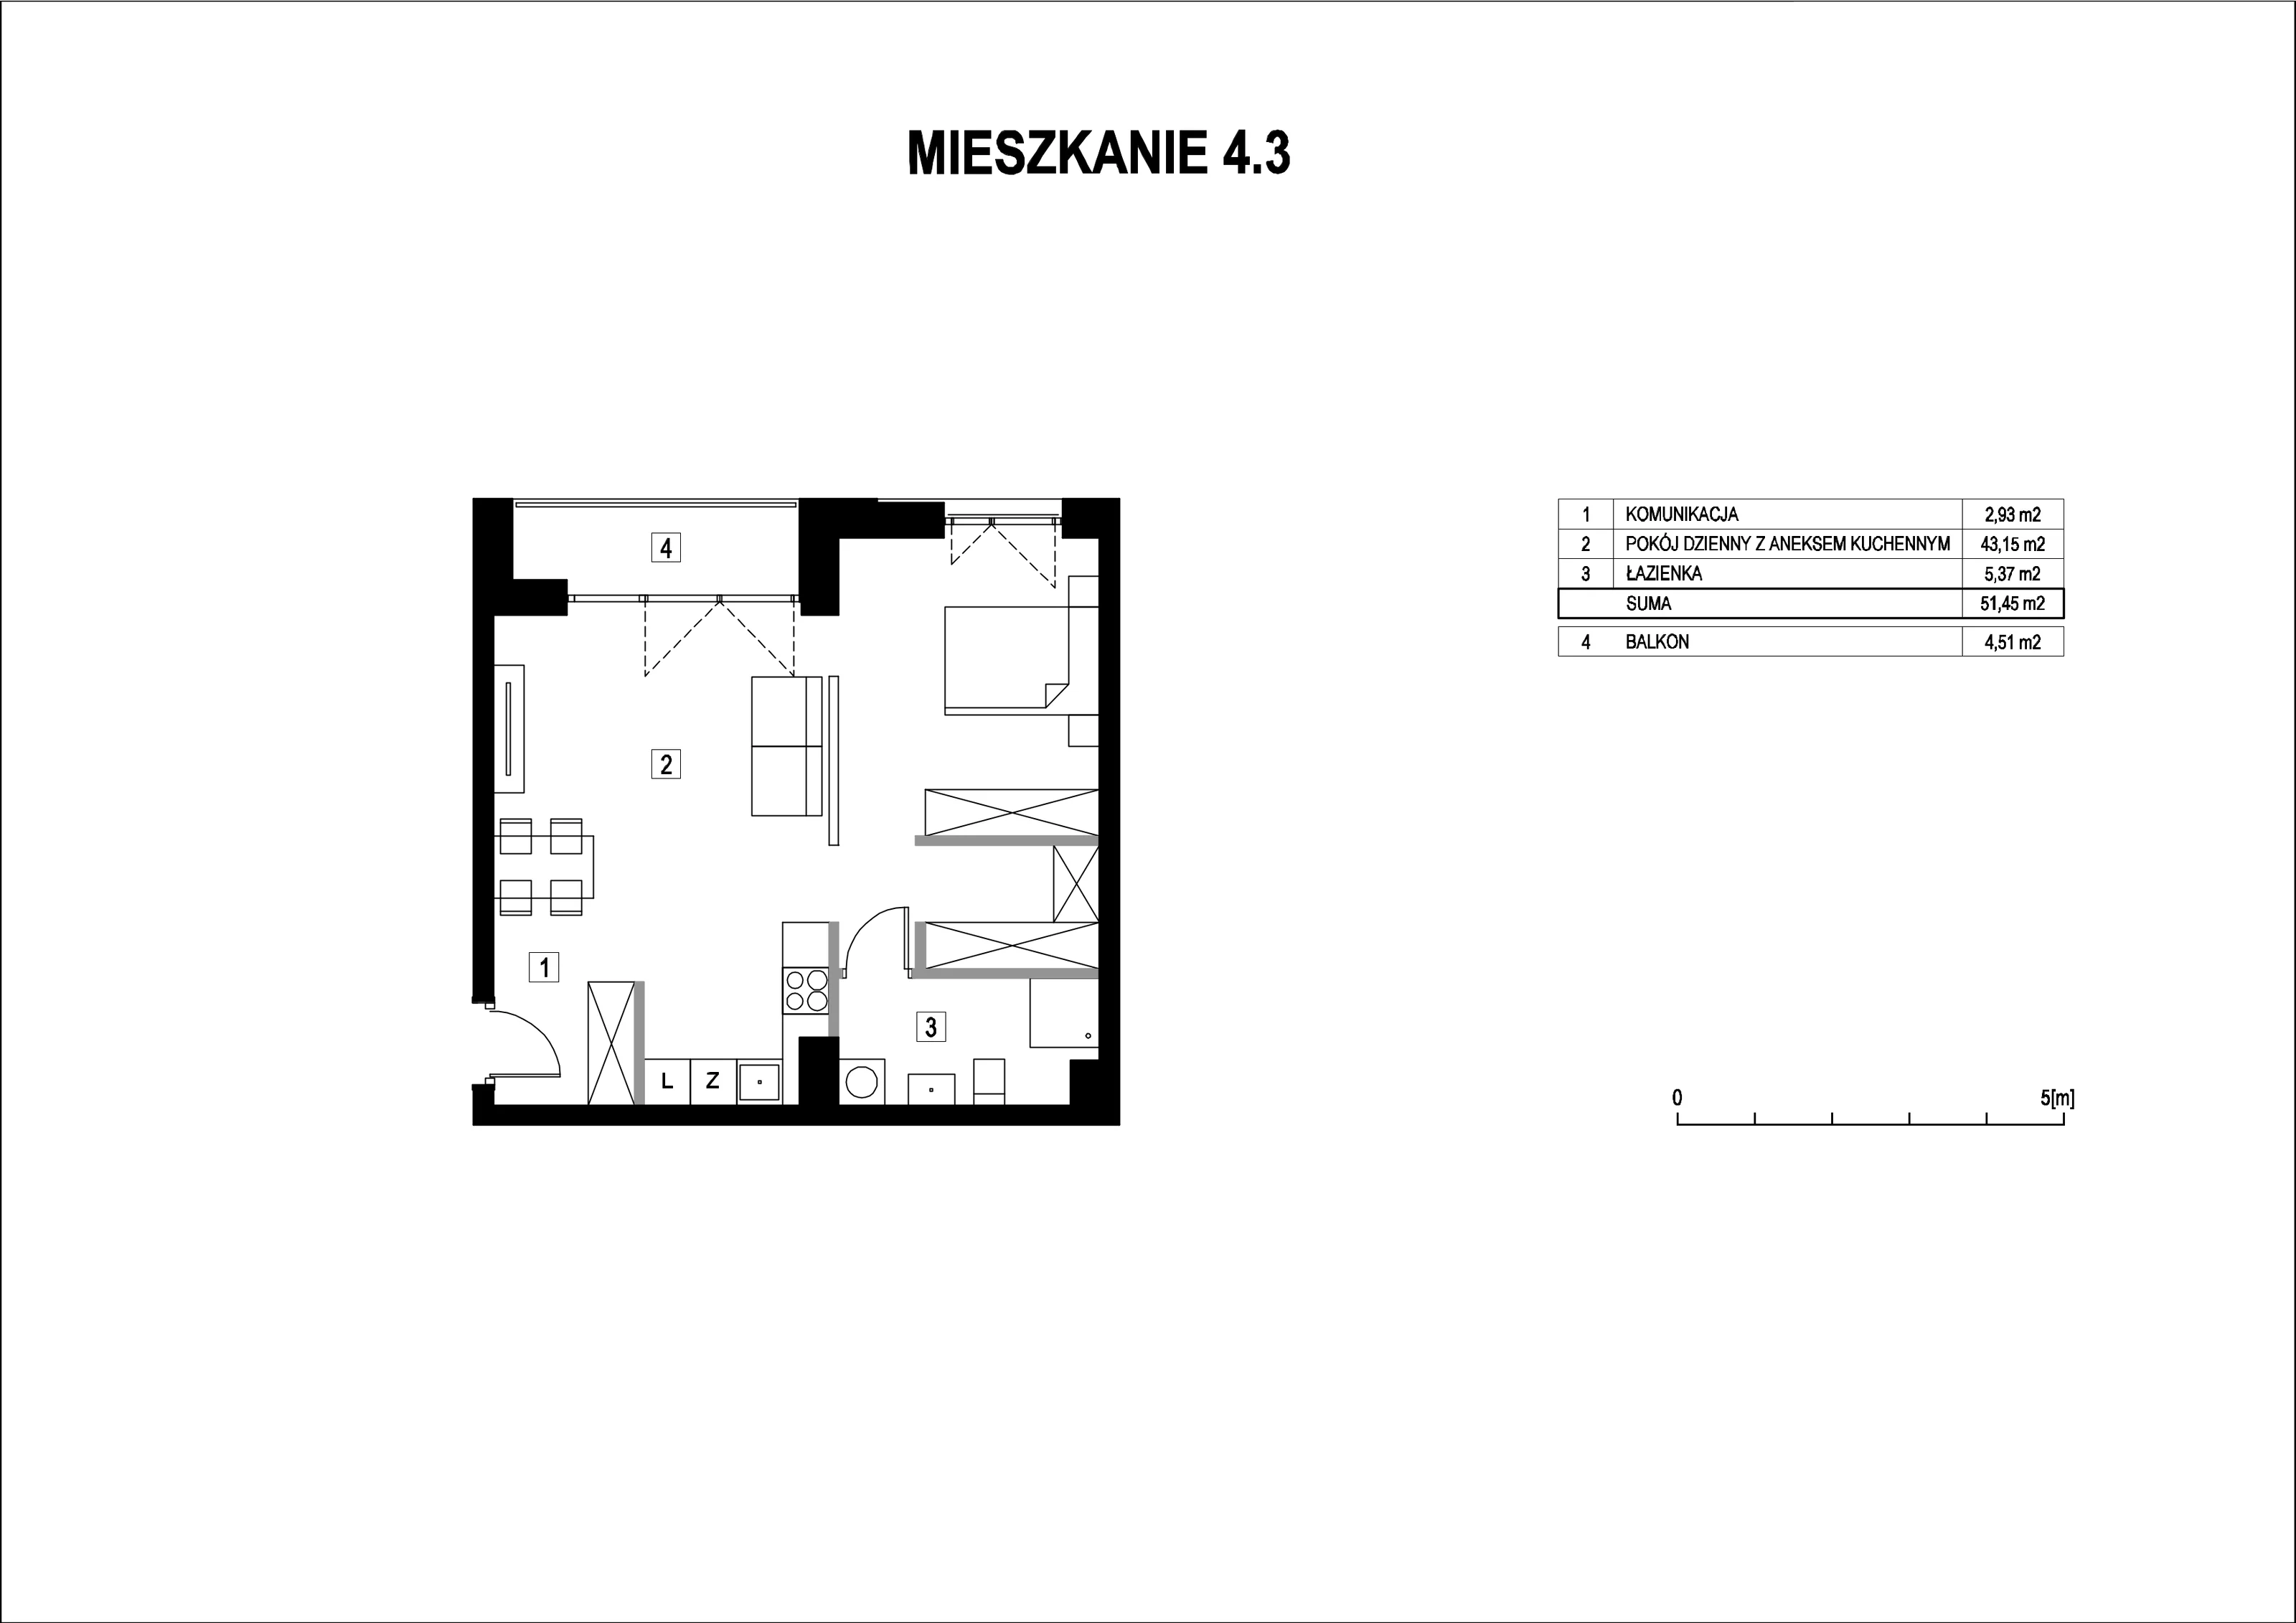 Apartament 51,45 m², piętro 4, oferta nr M4_3, La Vie Art, Łódź, Polesie, ul. 6 Sierpnia 10